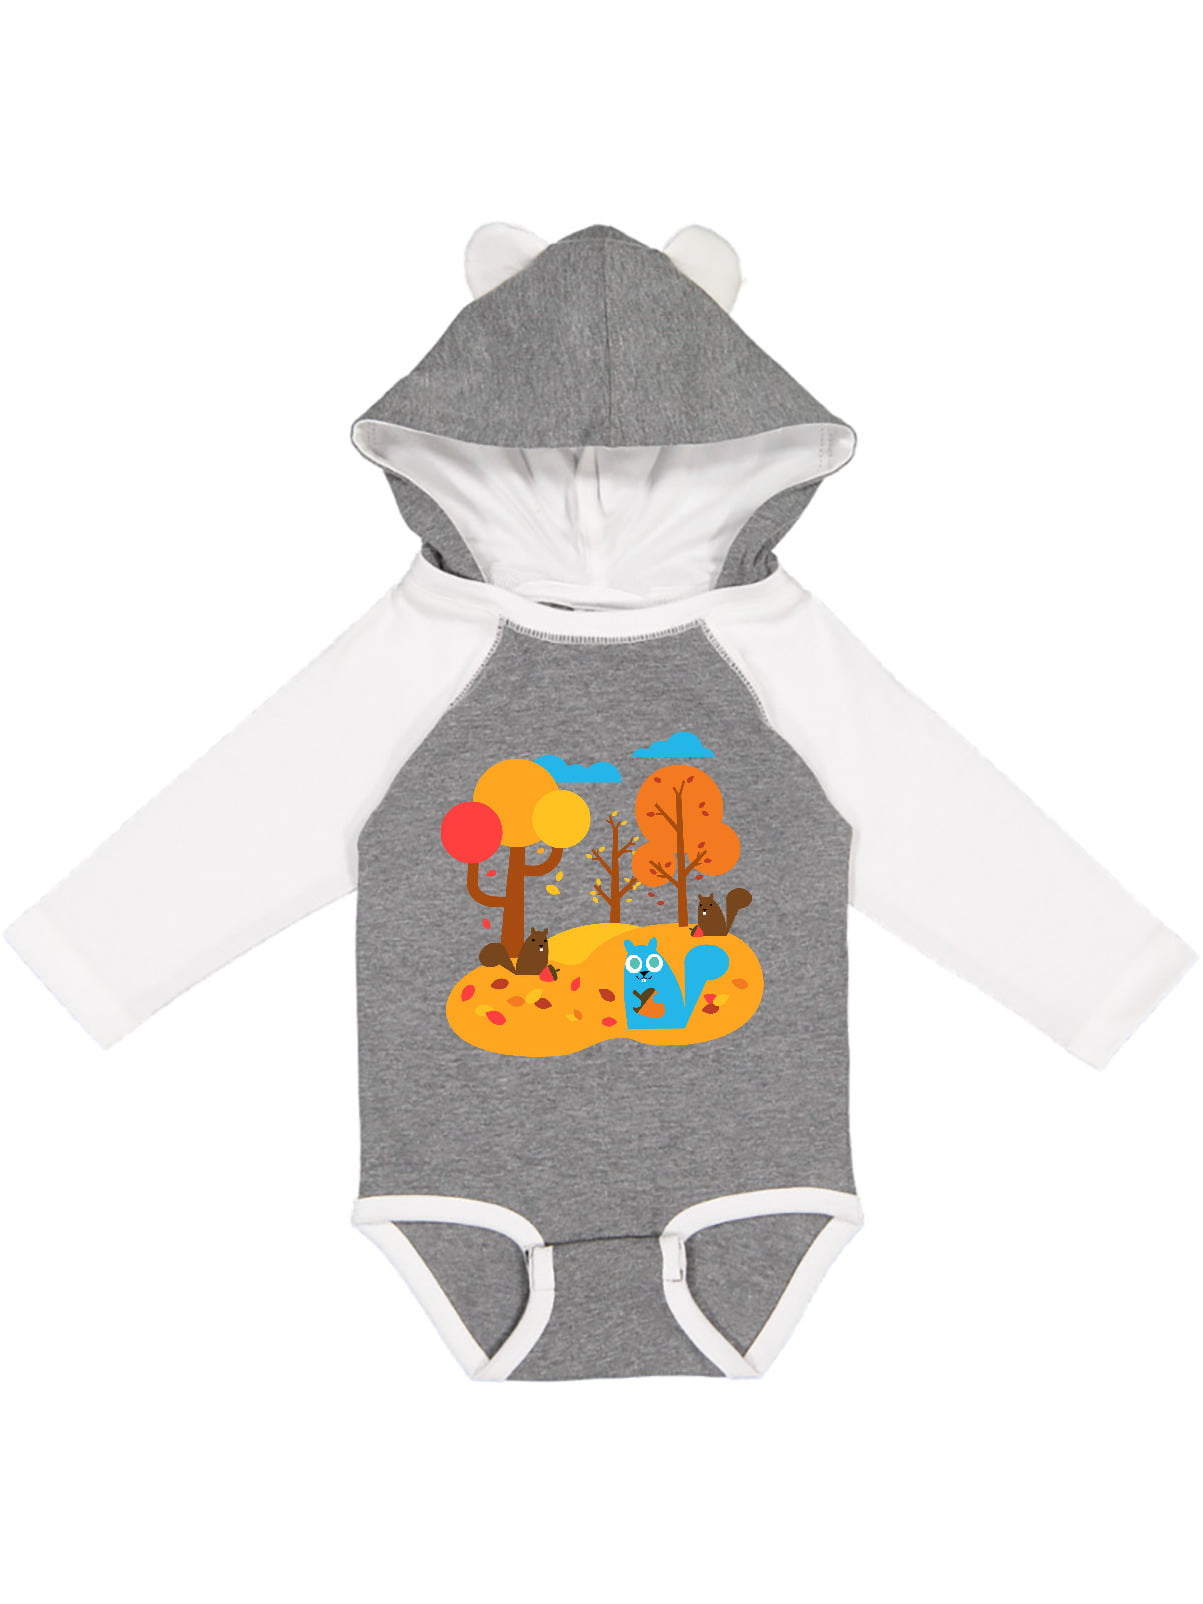 Acorns and Squirrels Unisex Baby Bodysuit Infant Cotton Outfits Long Sleeve Jumpsuit 